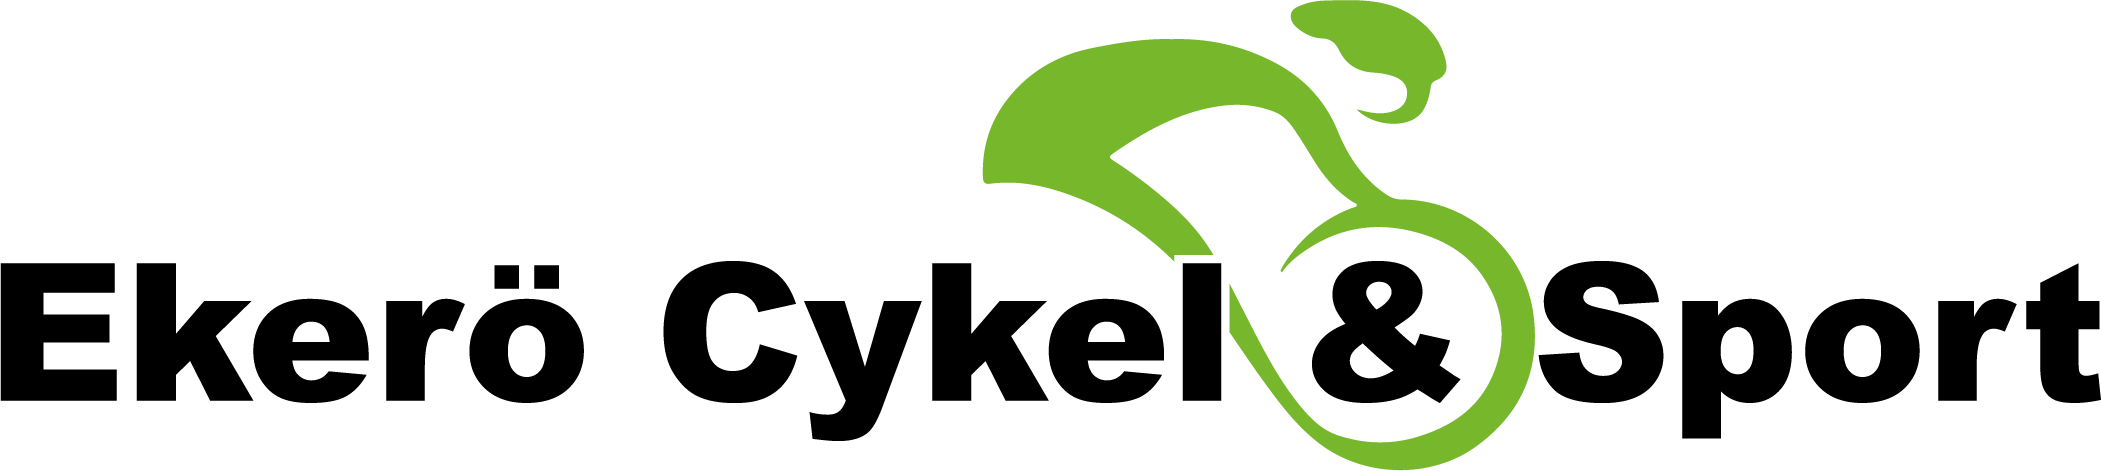 Ekerö Cykel & Sport logo